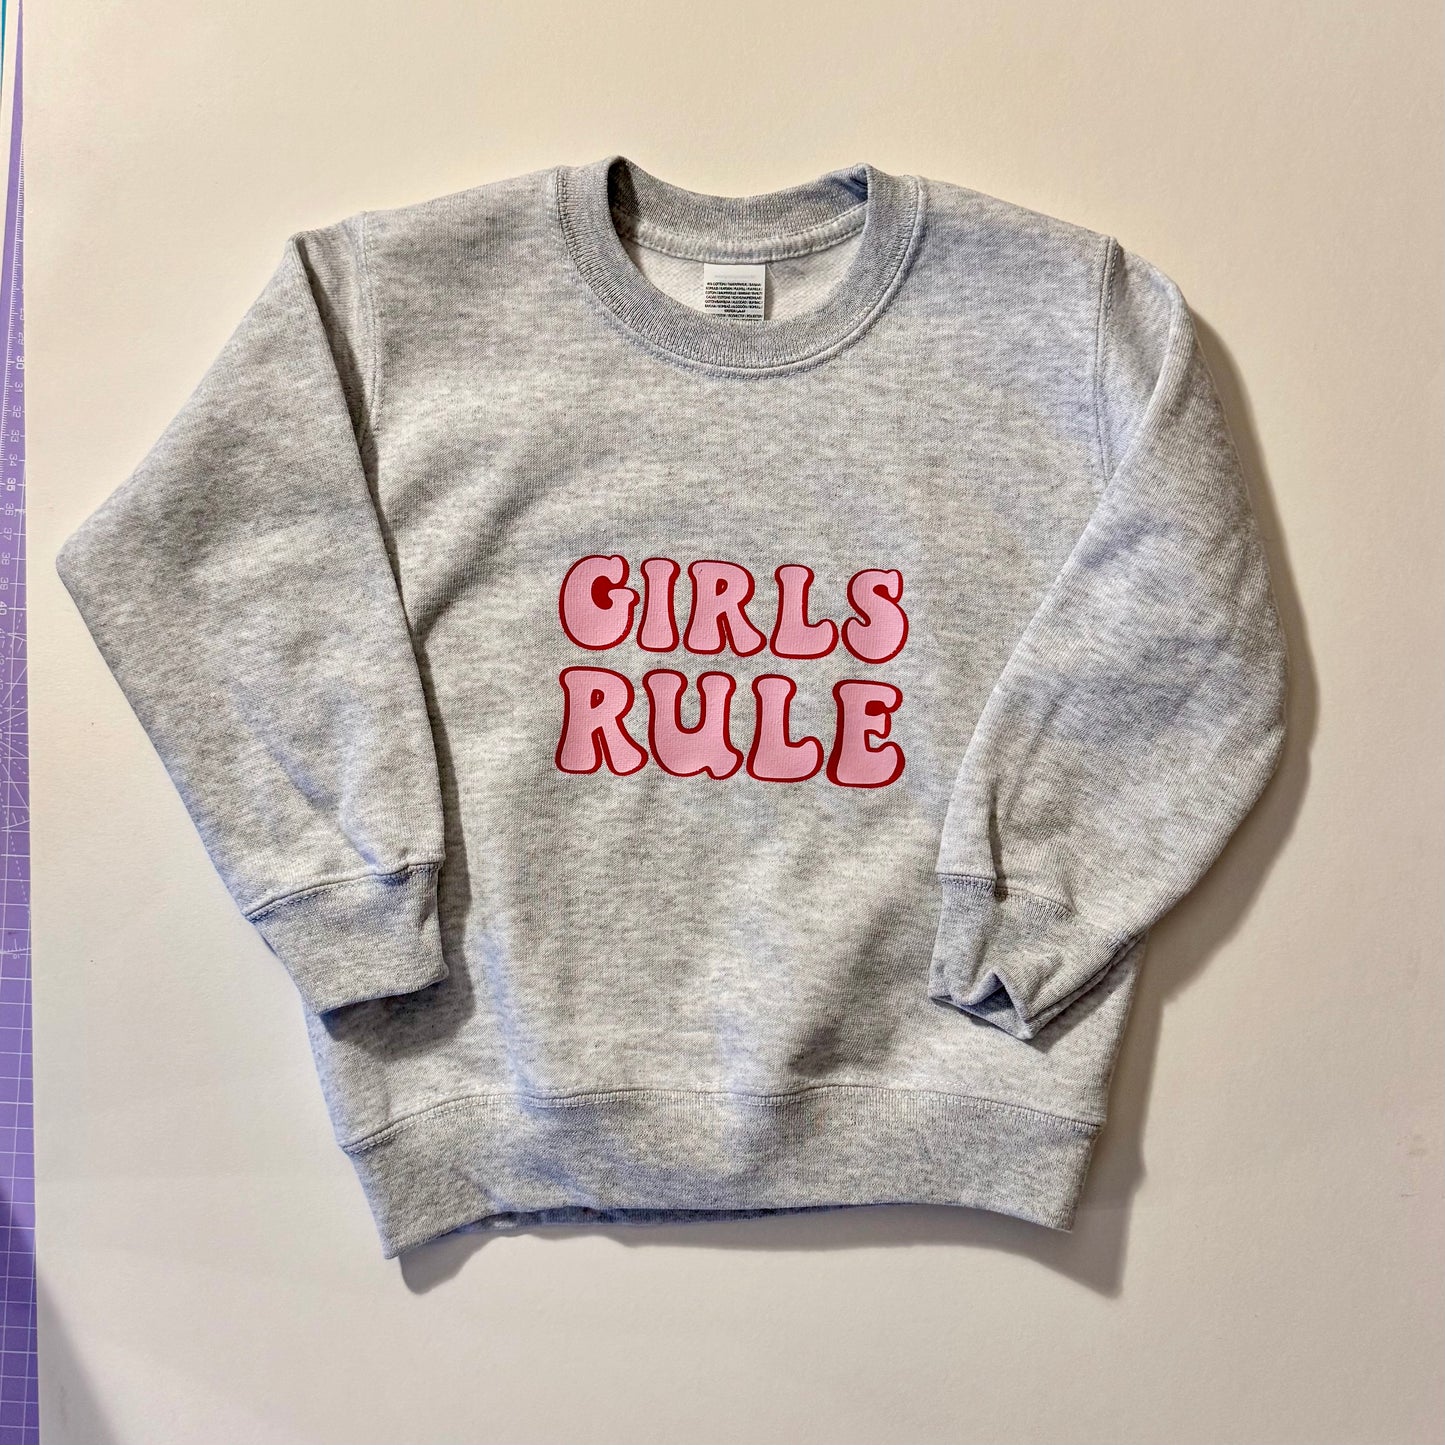 SALE Kids Girls Rule Sweatshirt - 3-4 years